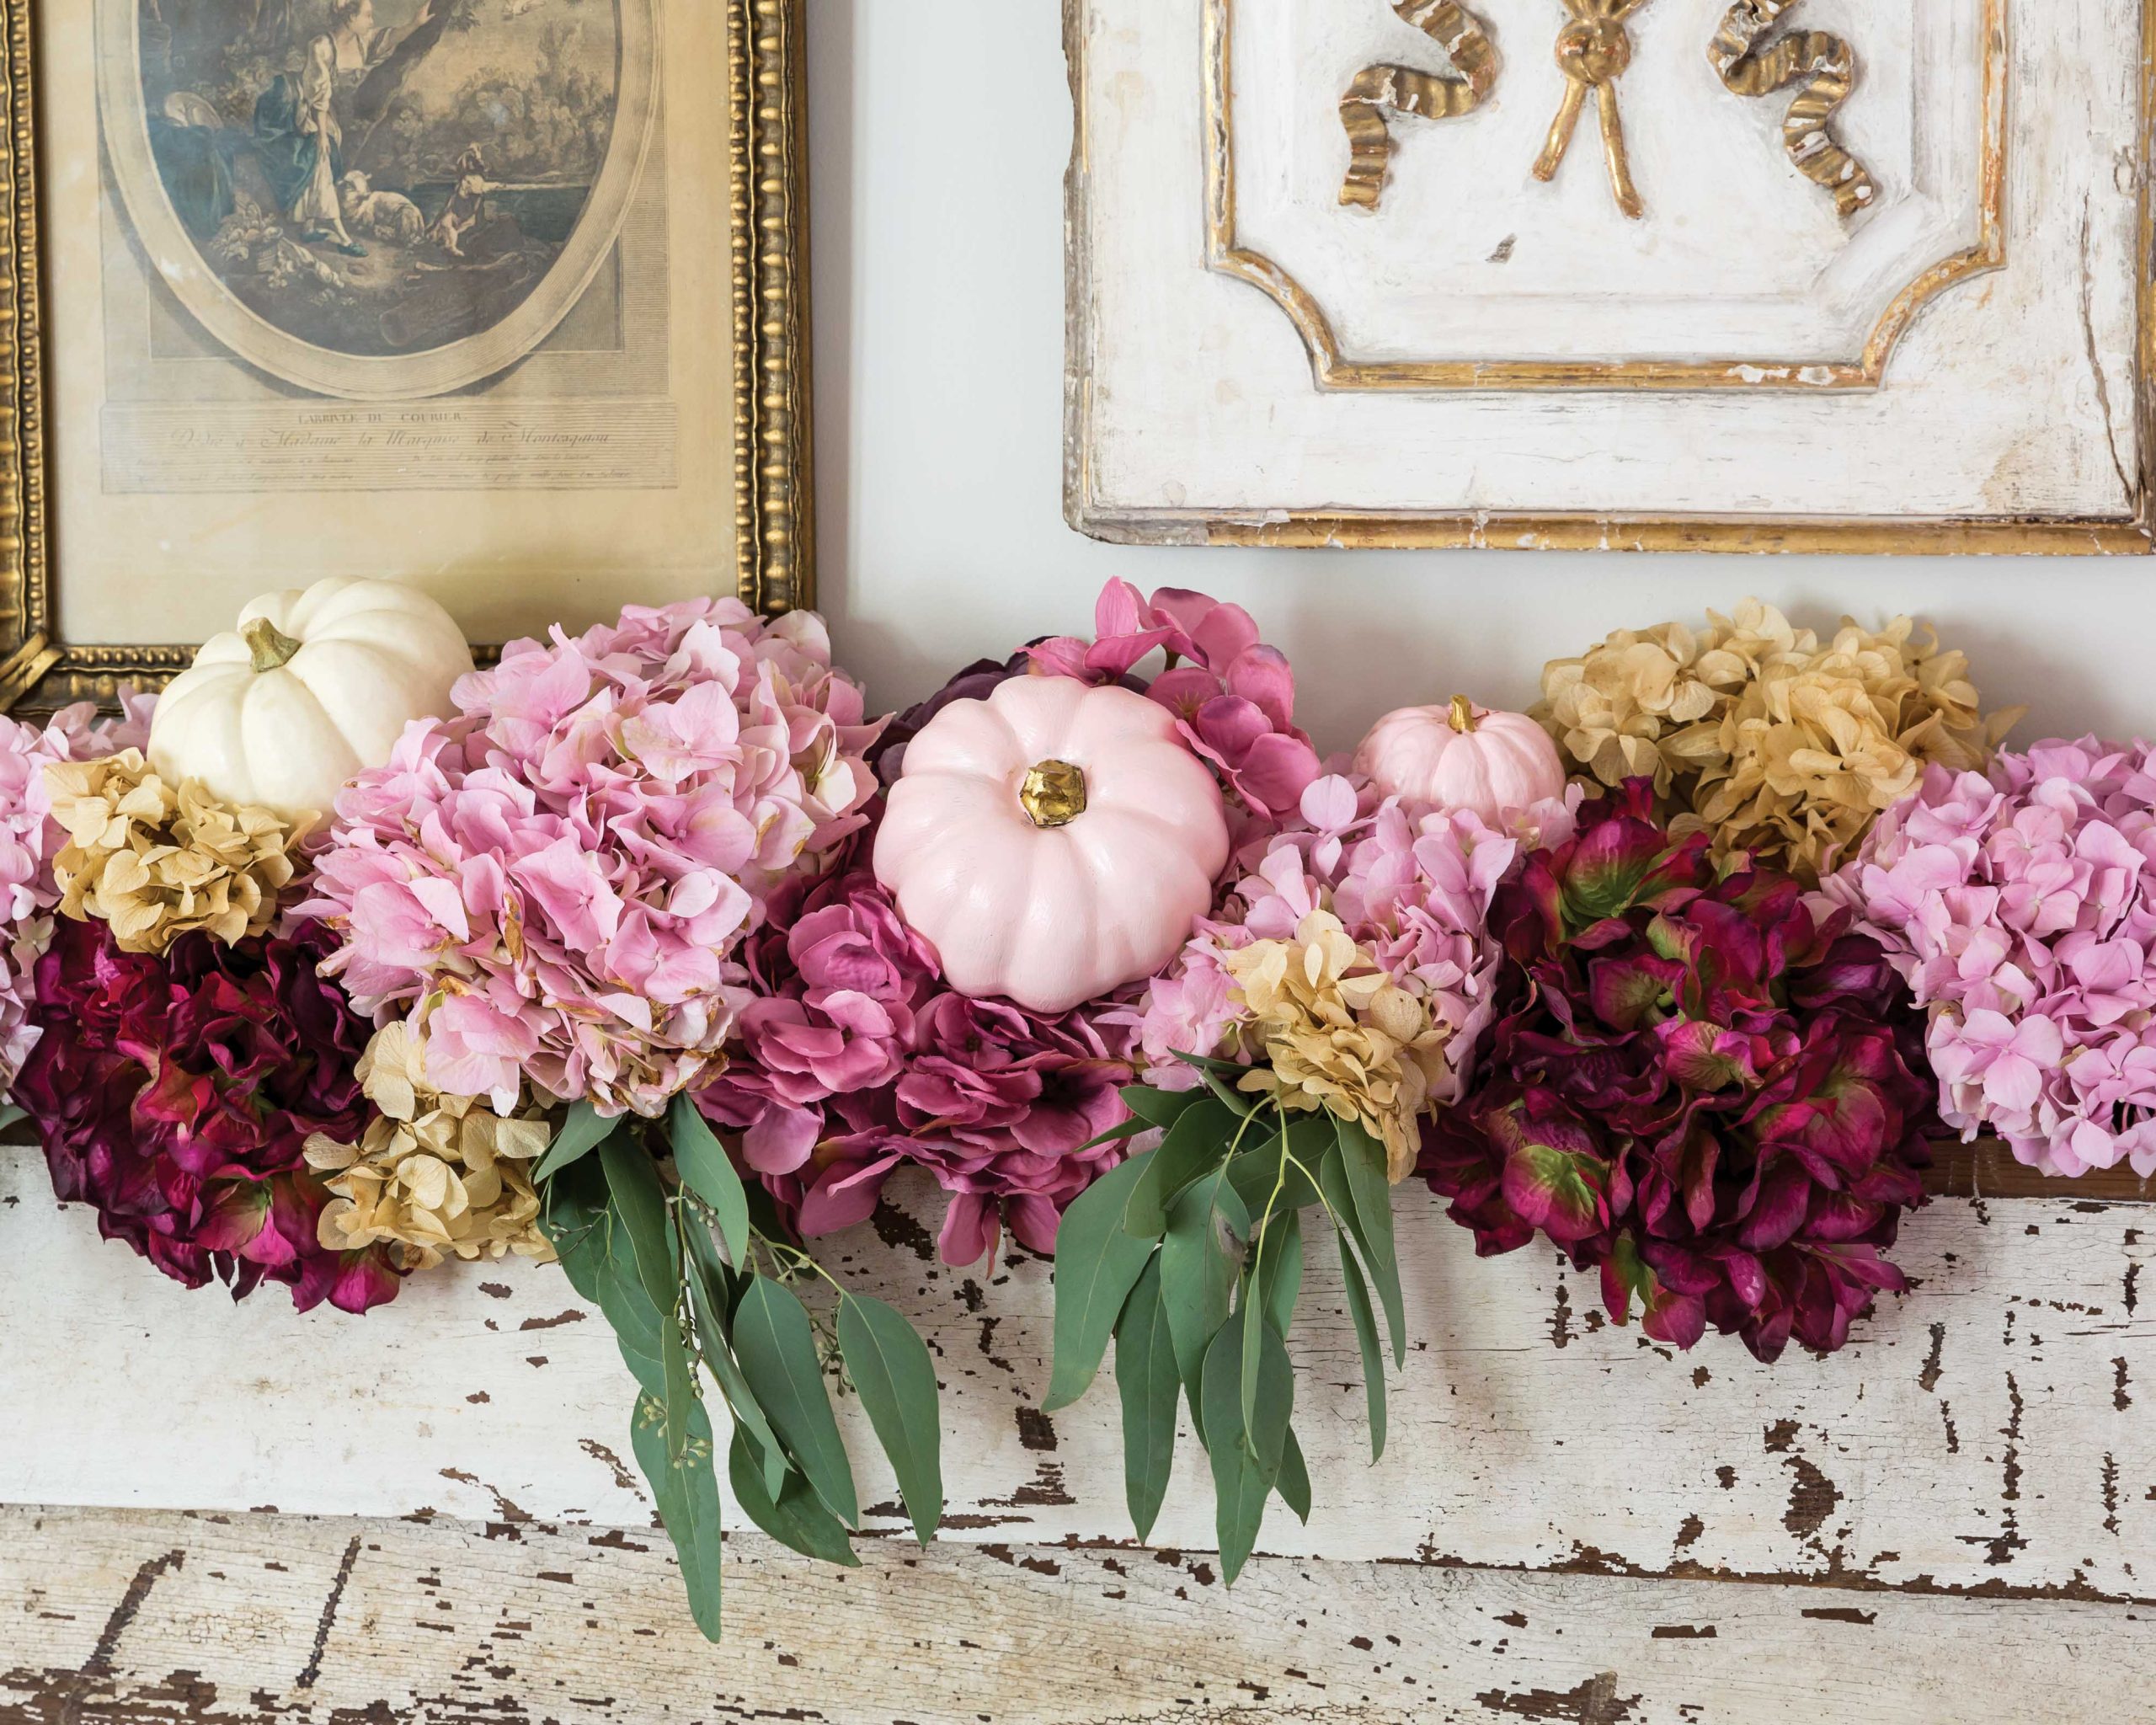  Pale pink pumpkins join vibrant hydrangea flowers atop a fireplace mantel.